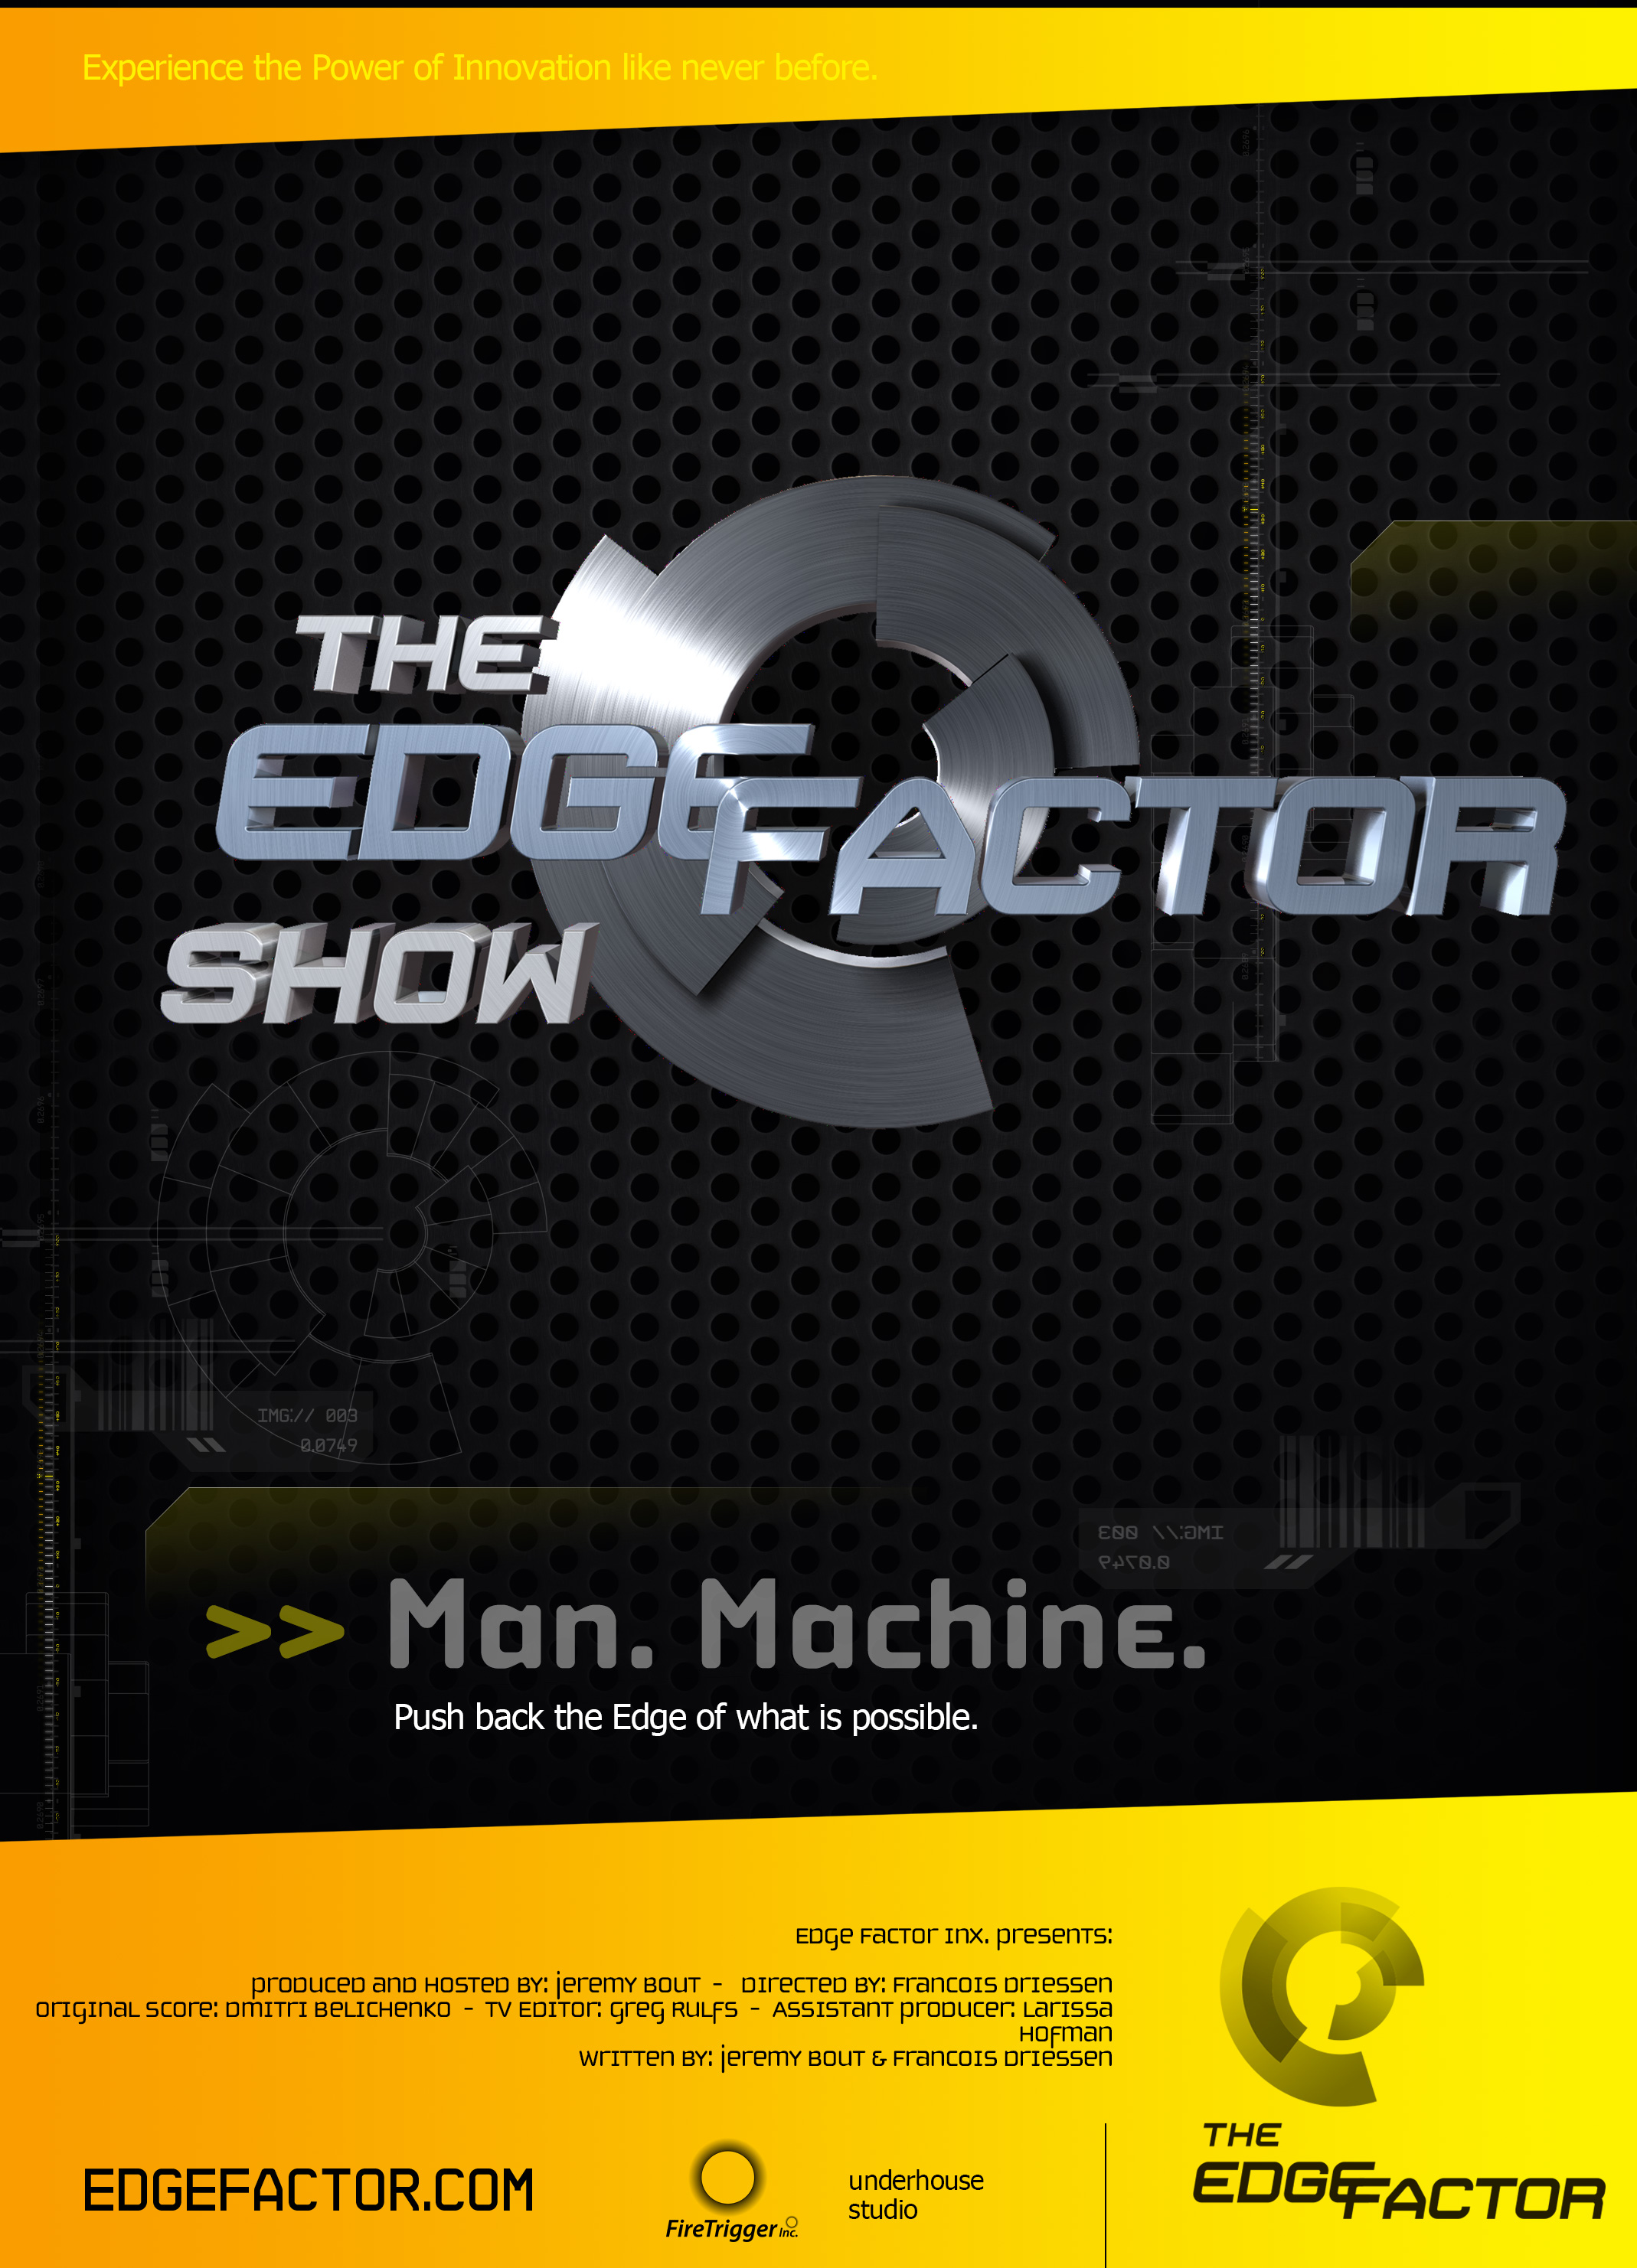 The Edge Factor Show